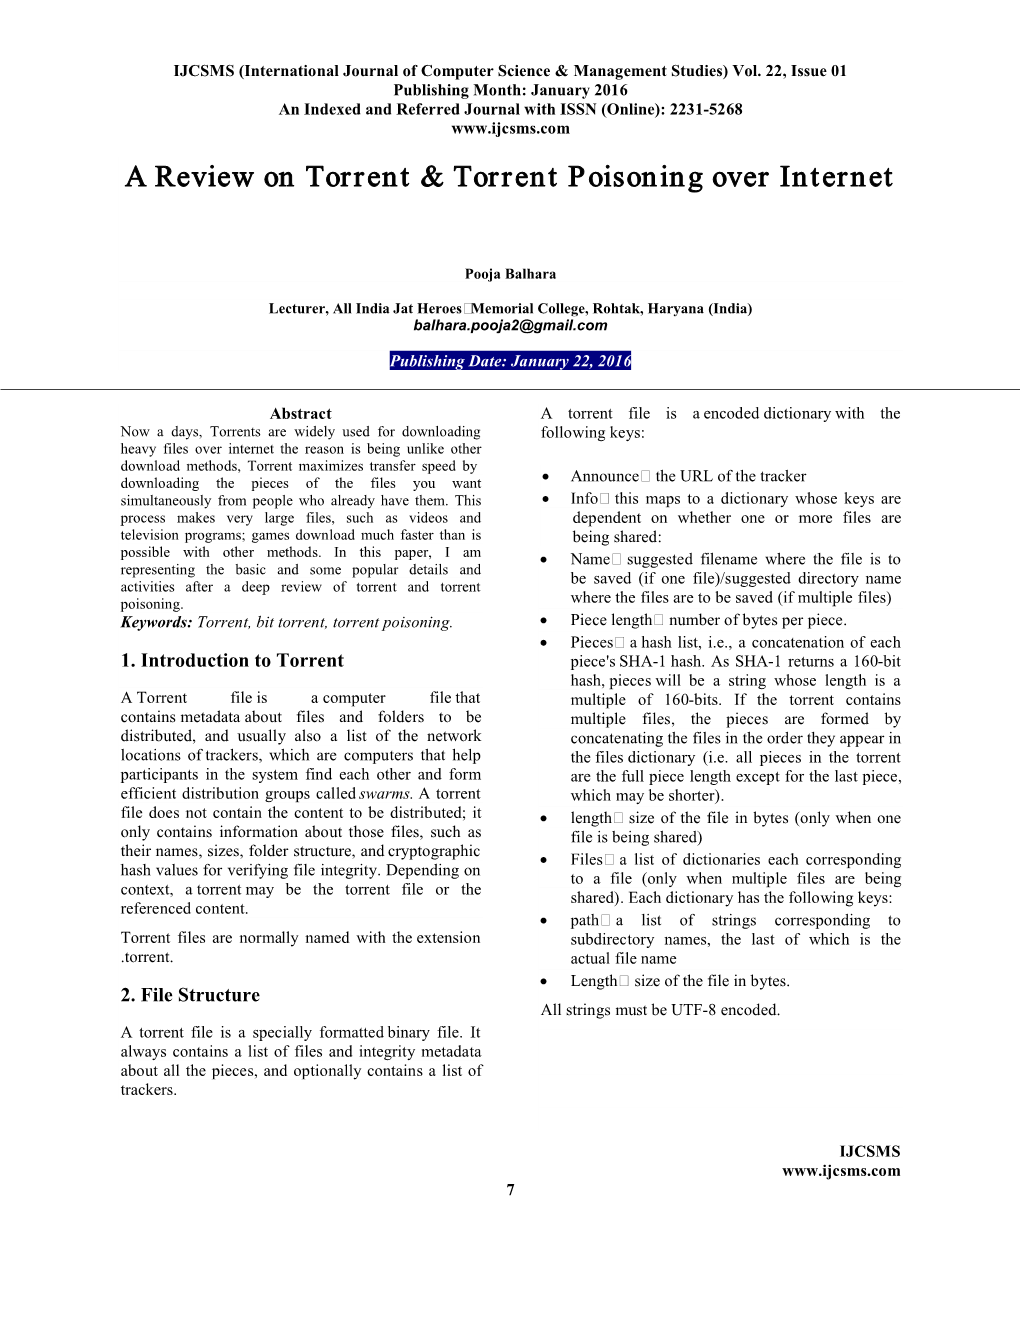 A Review on Torrent & Torrent Poisoning Over Internet